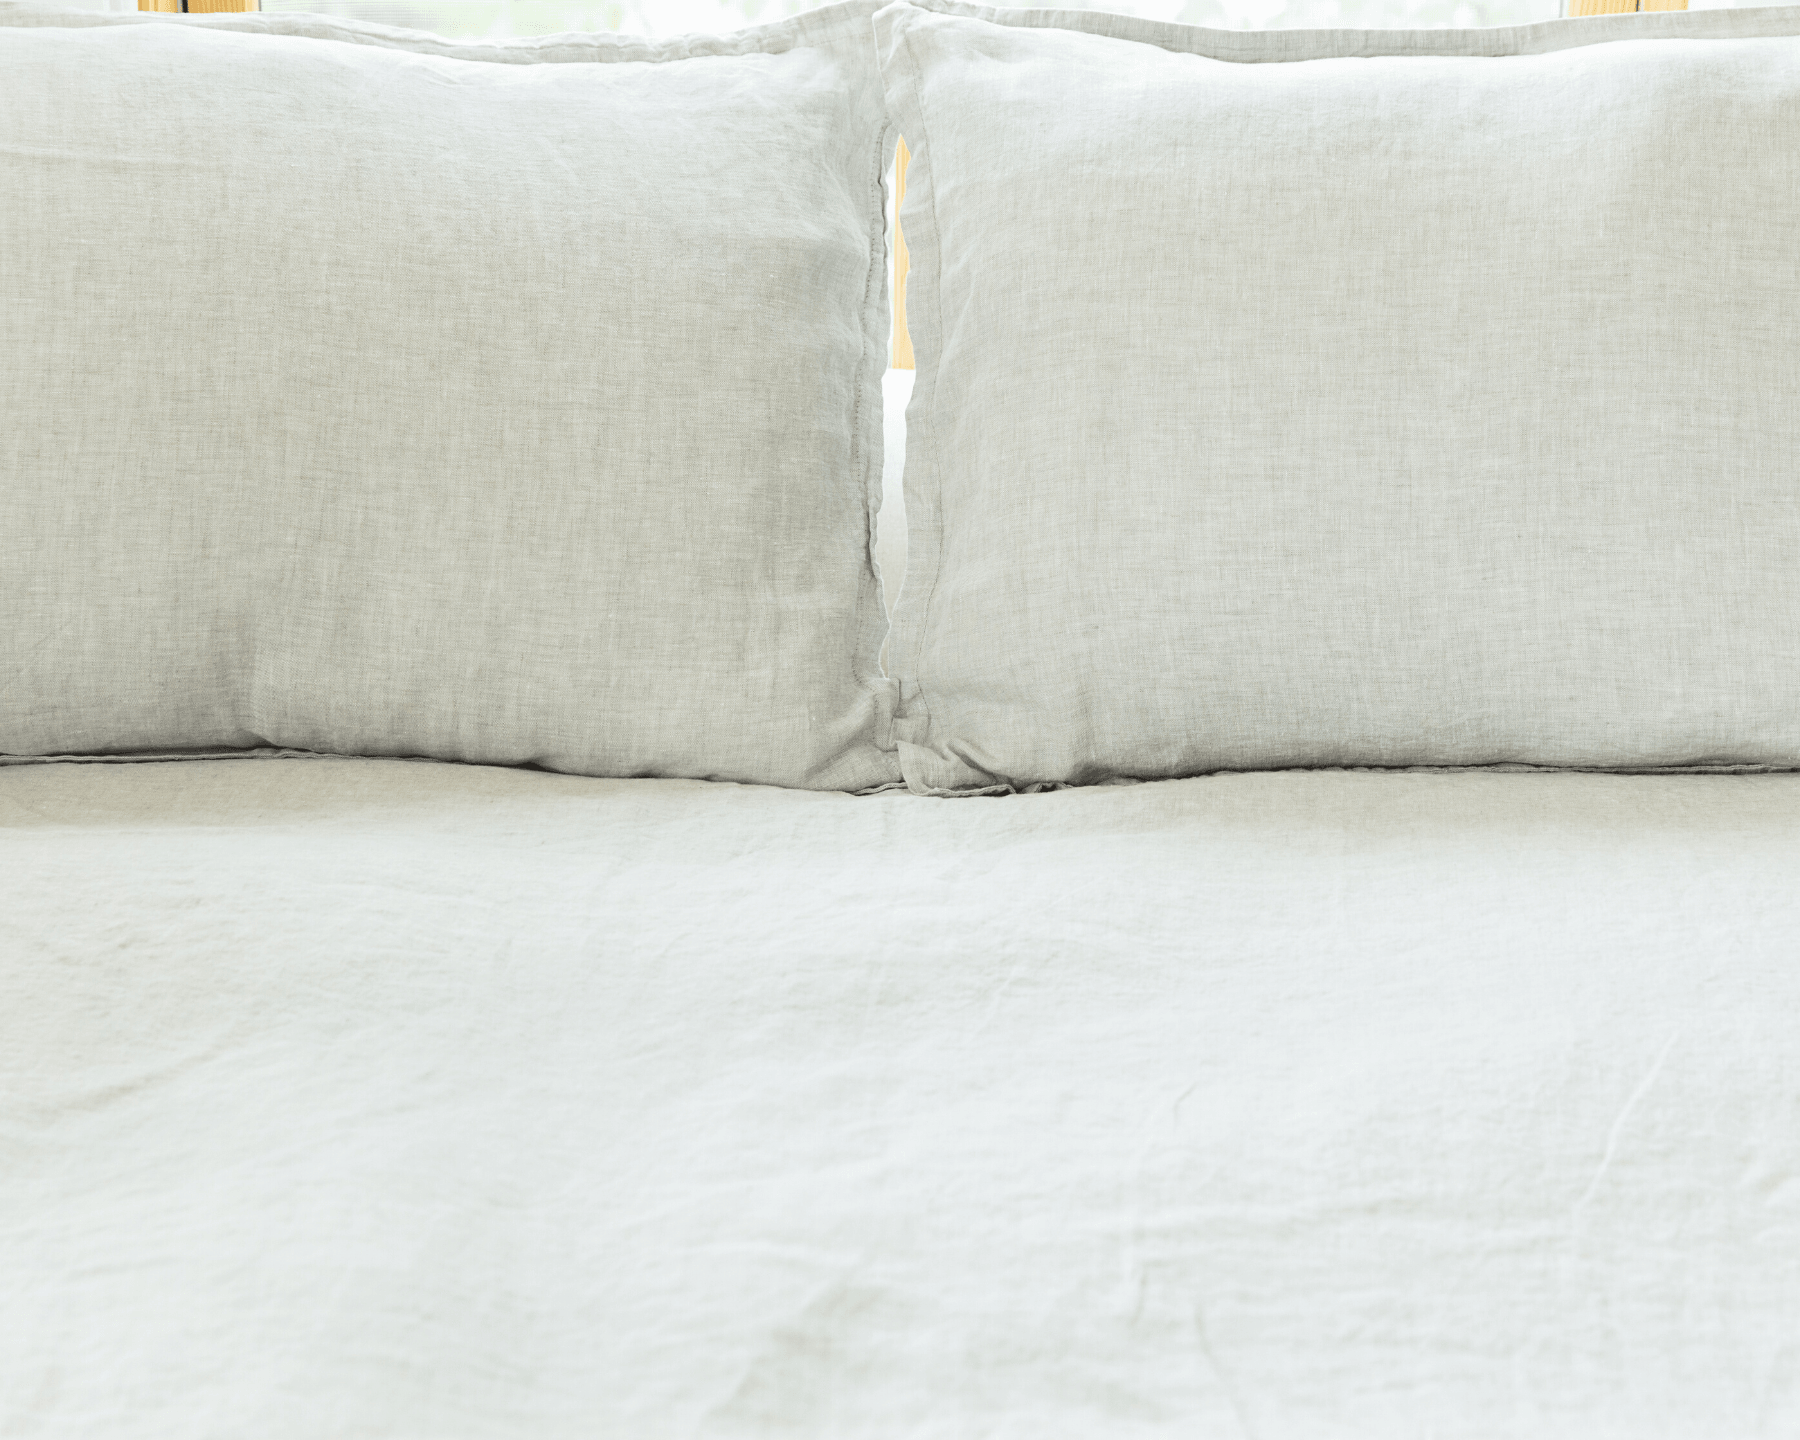 Chambray grey organic European linen duvet cover set with two matching pillowcases - Grå (grey)